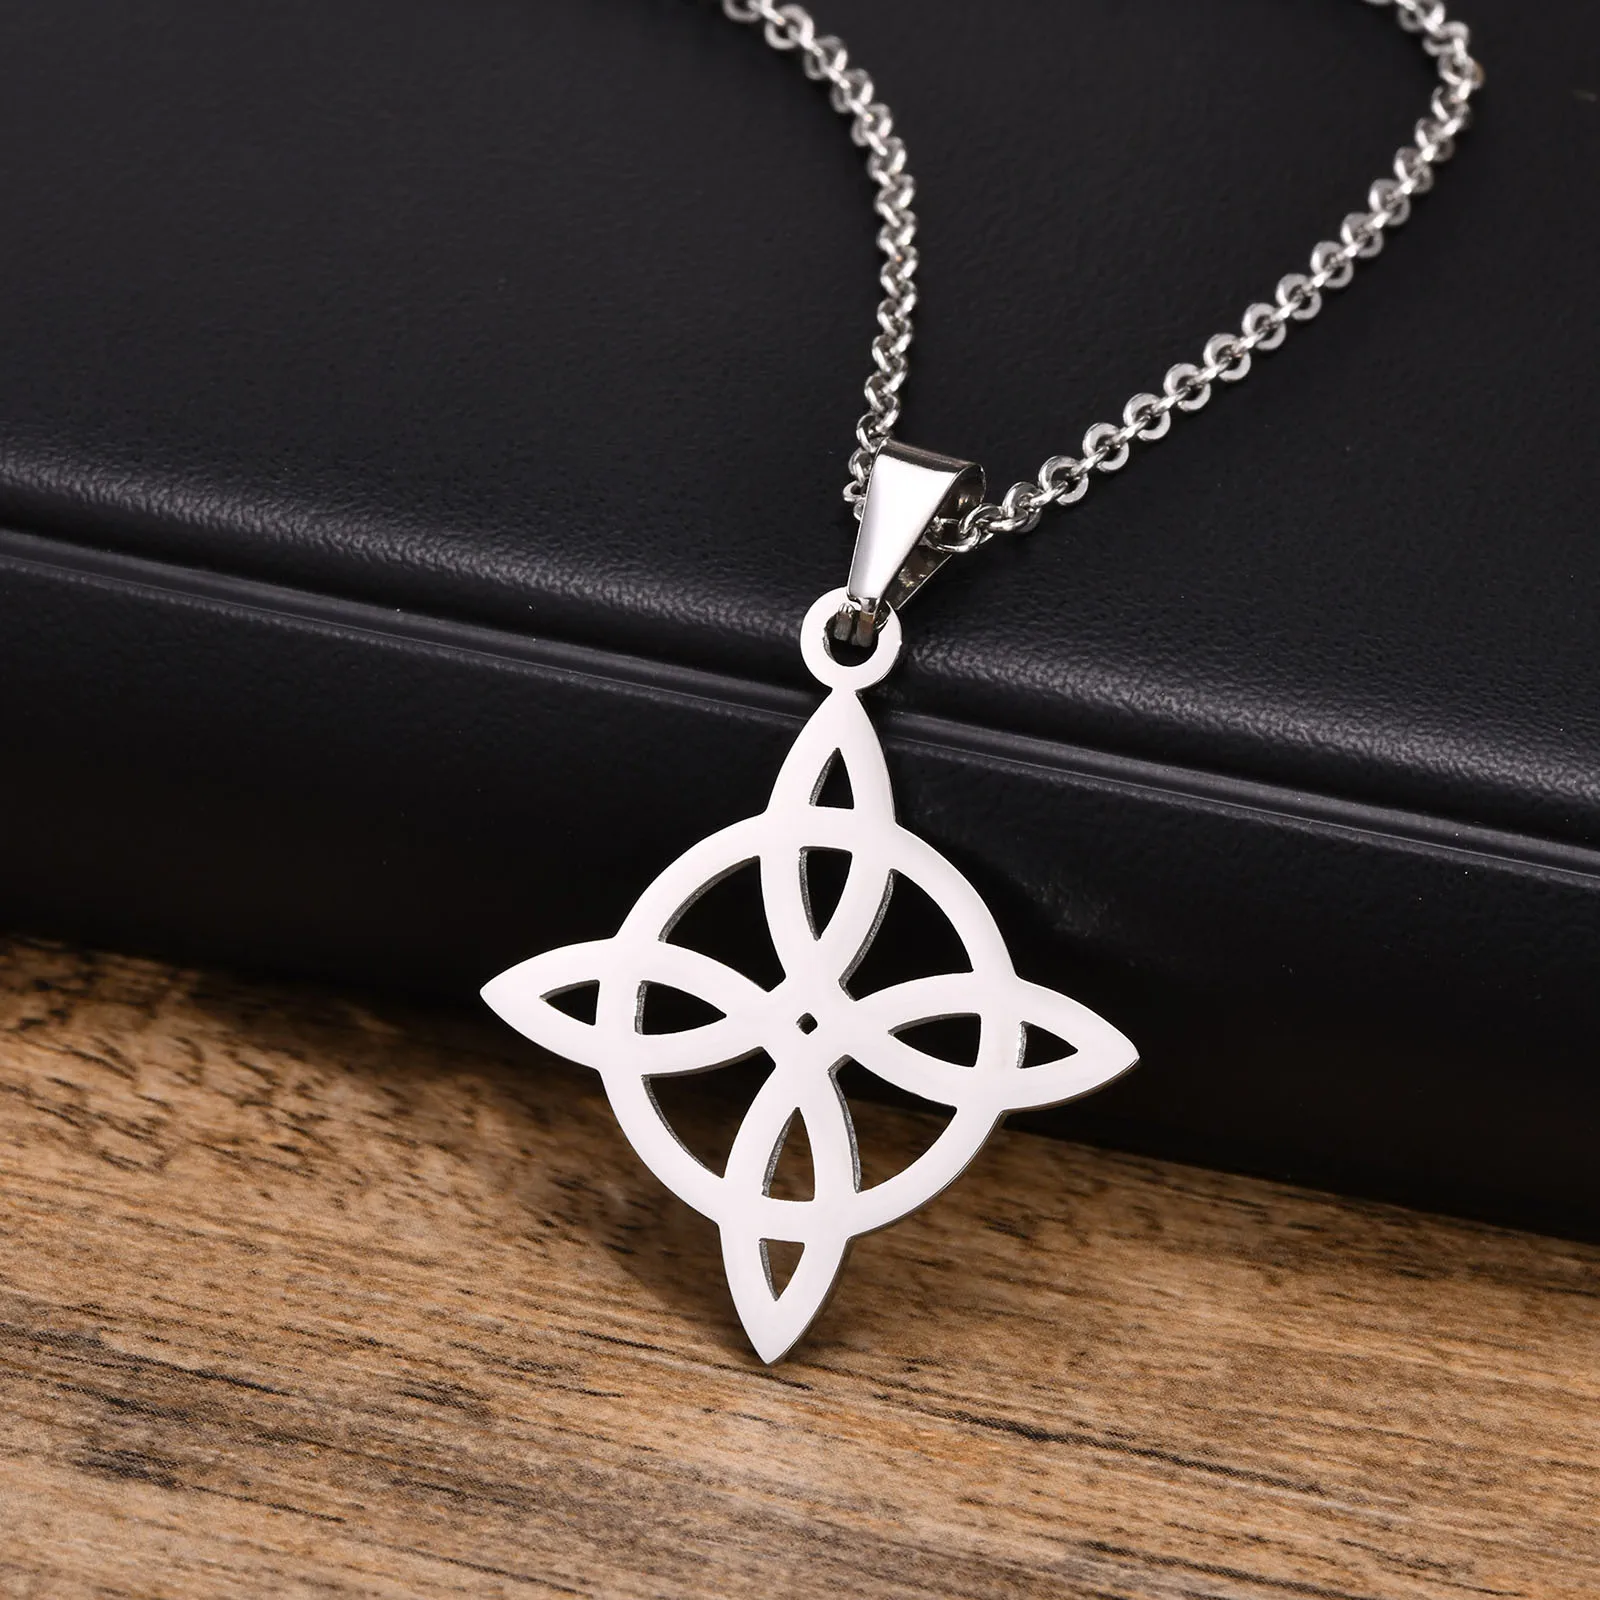 Vnox Witchcraft Witch's Кельтский Узел геометрические ожерелья для мужчин женщин